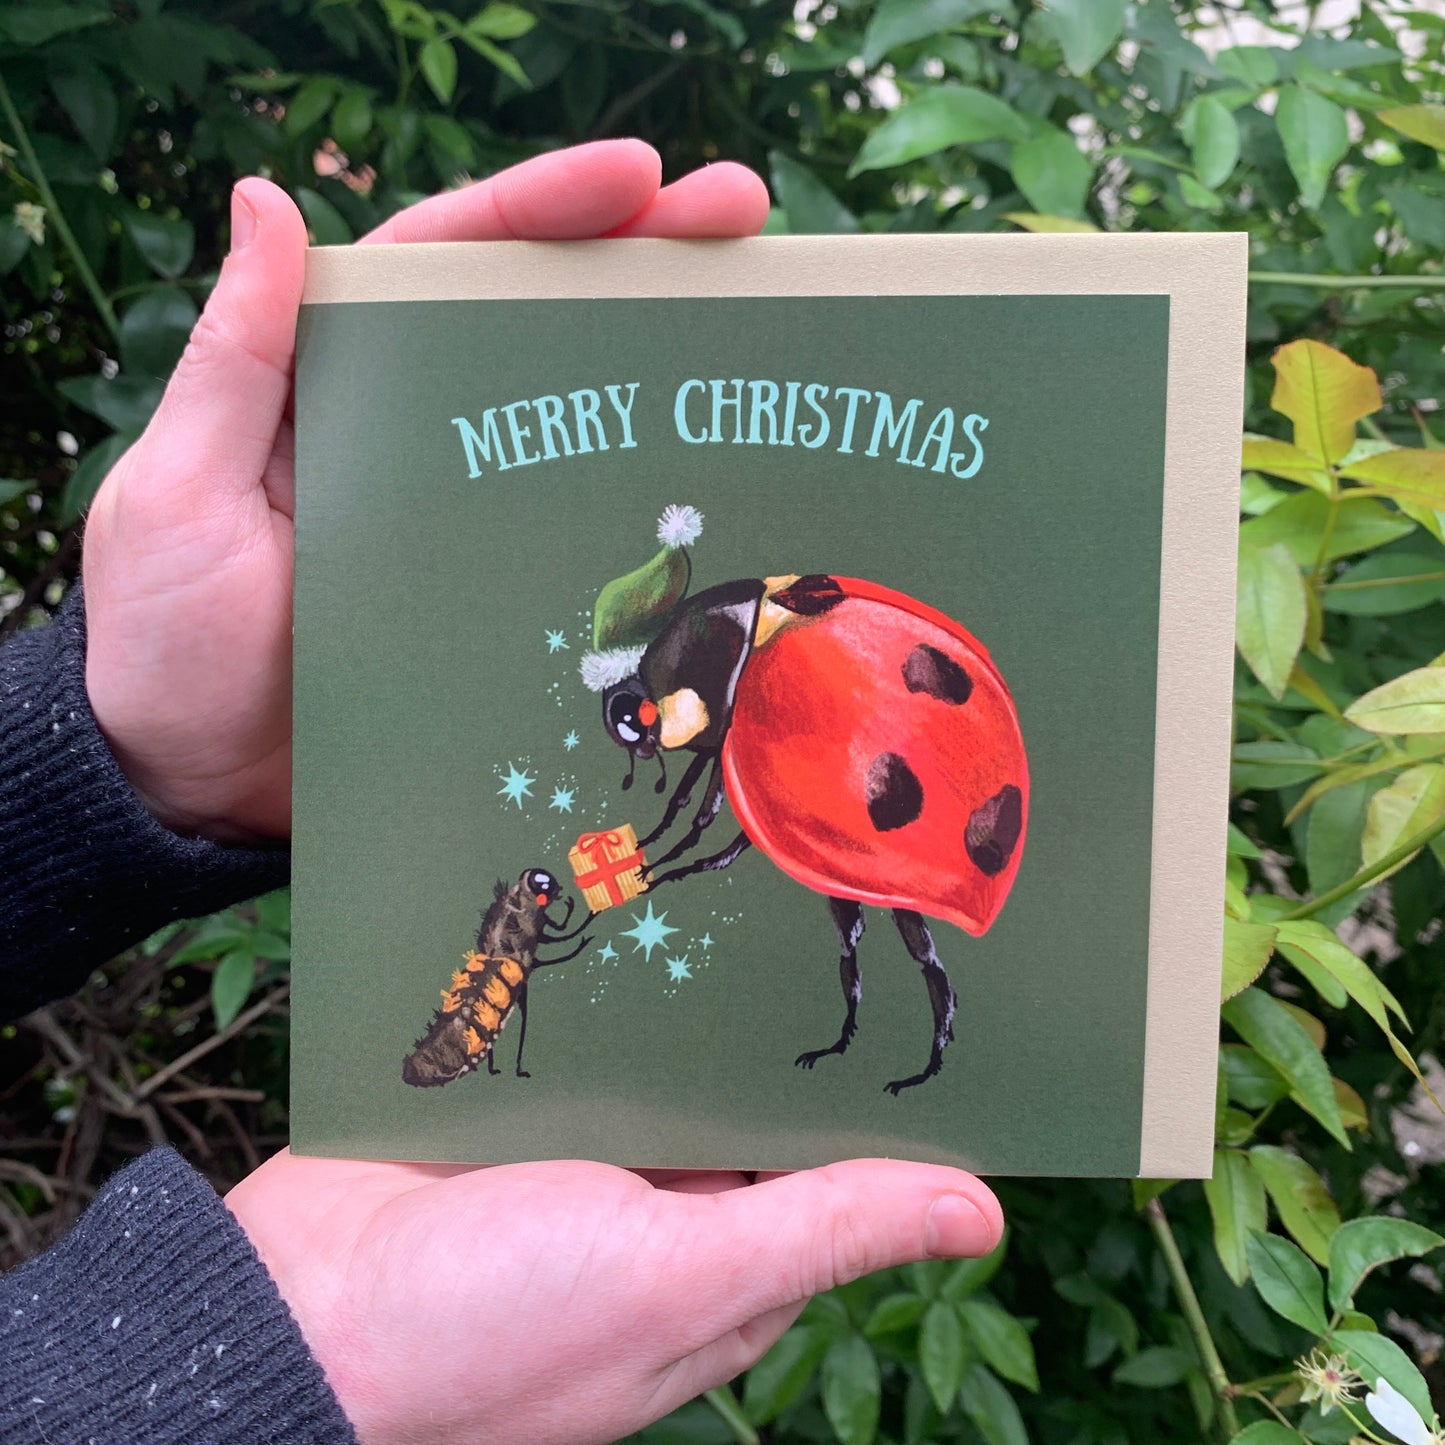 Anna Seed Art | Illustrated Christmas Card! "Merry Christmas" - Blank square seasonal greeting card